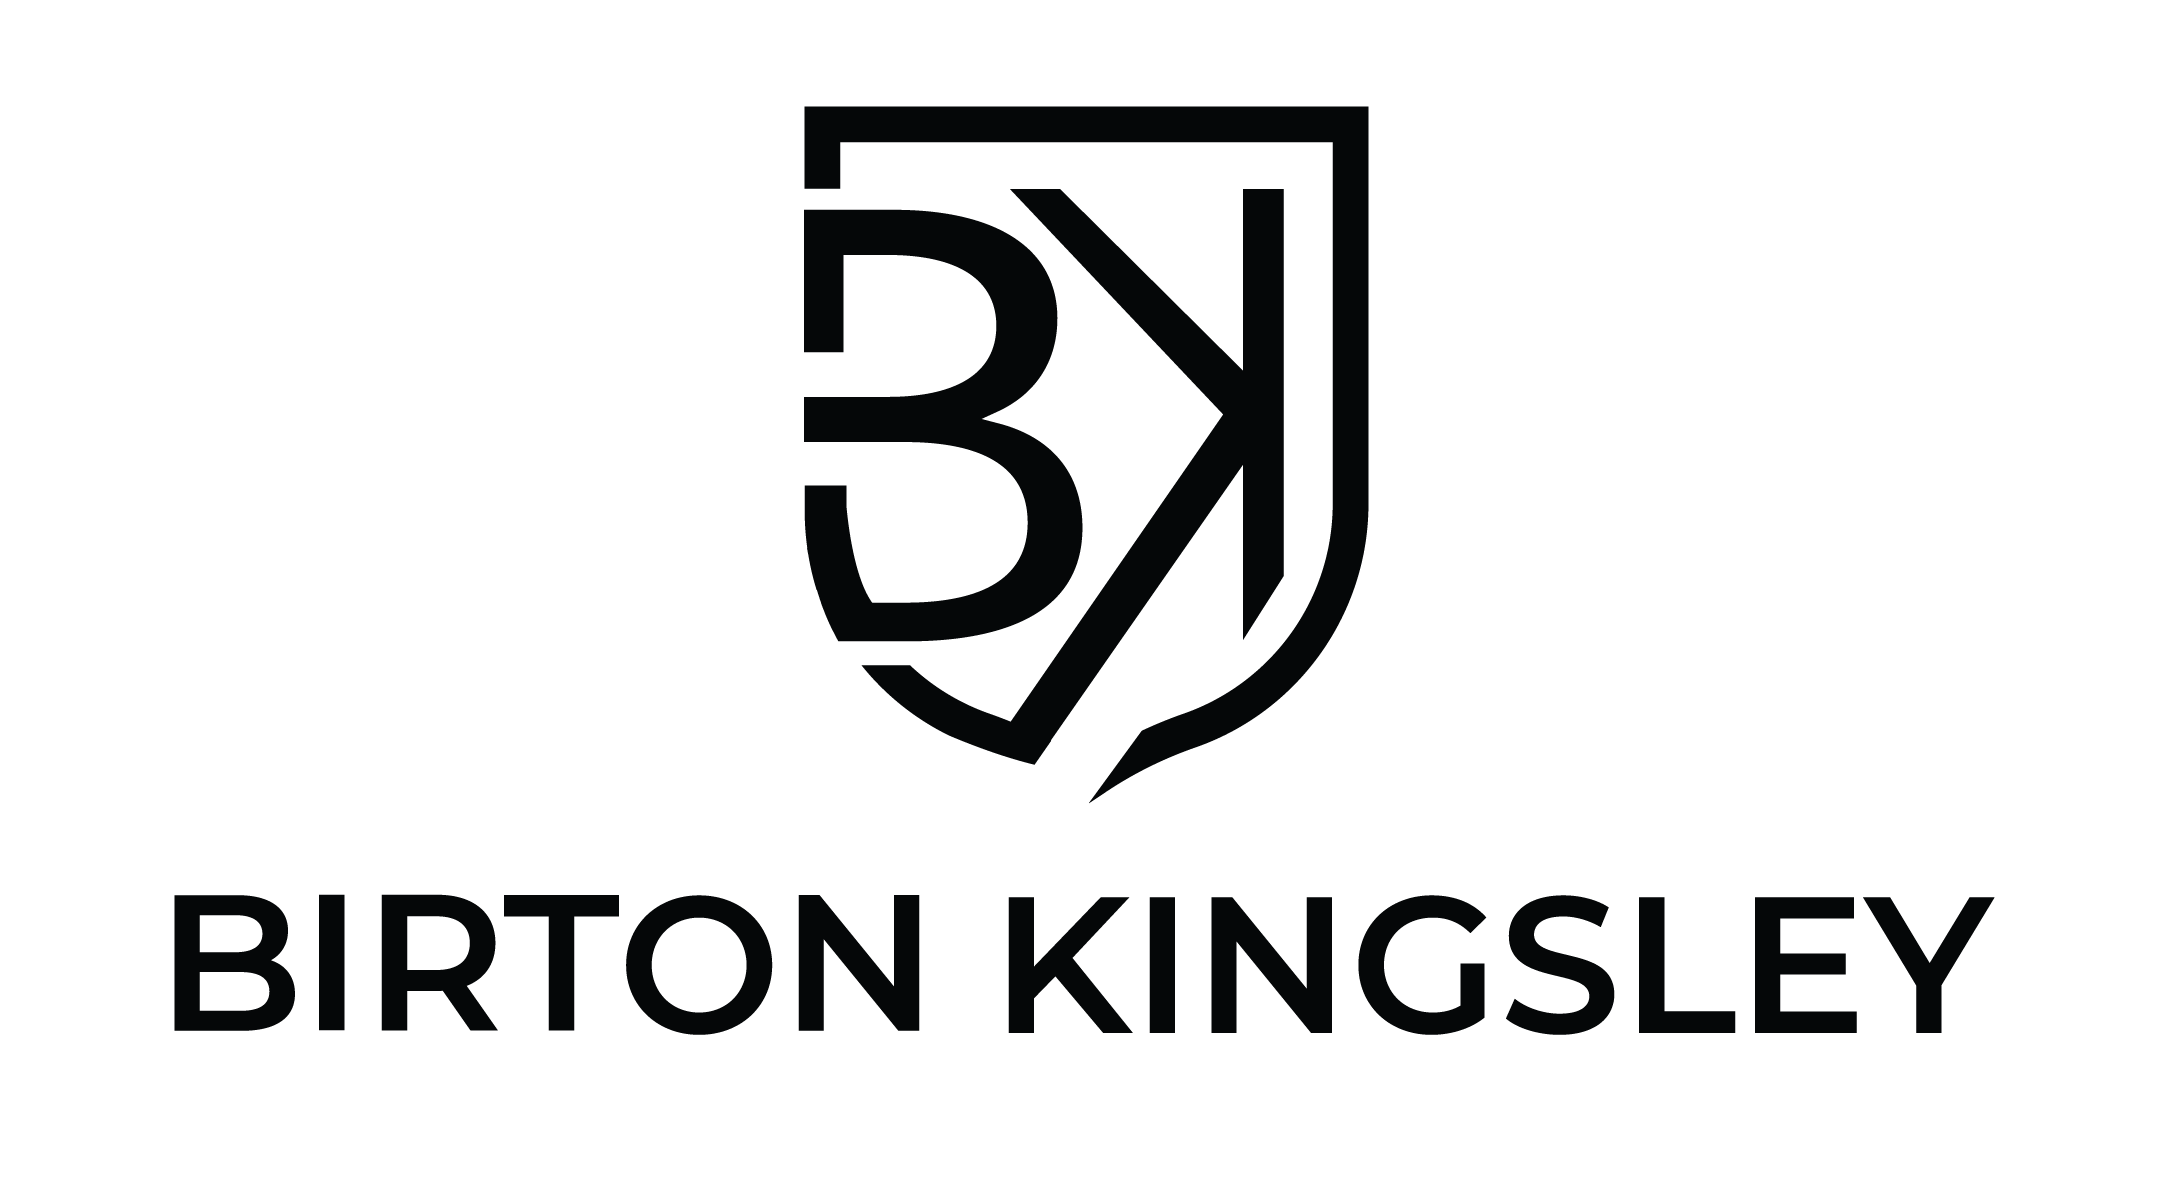 Birton Kingsley